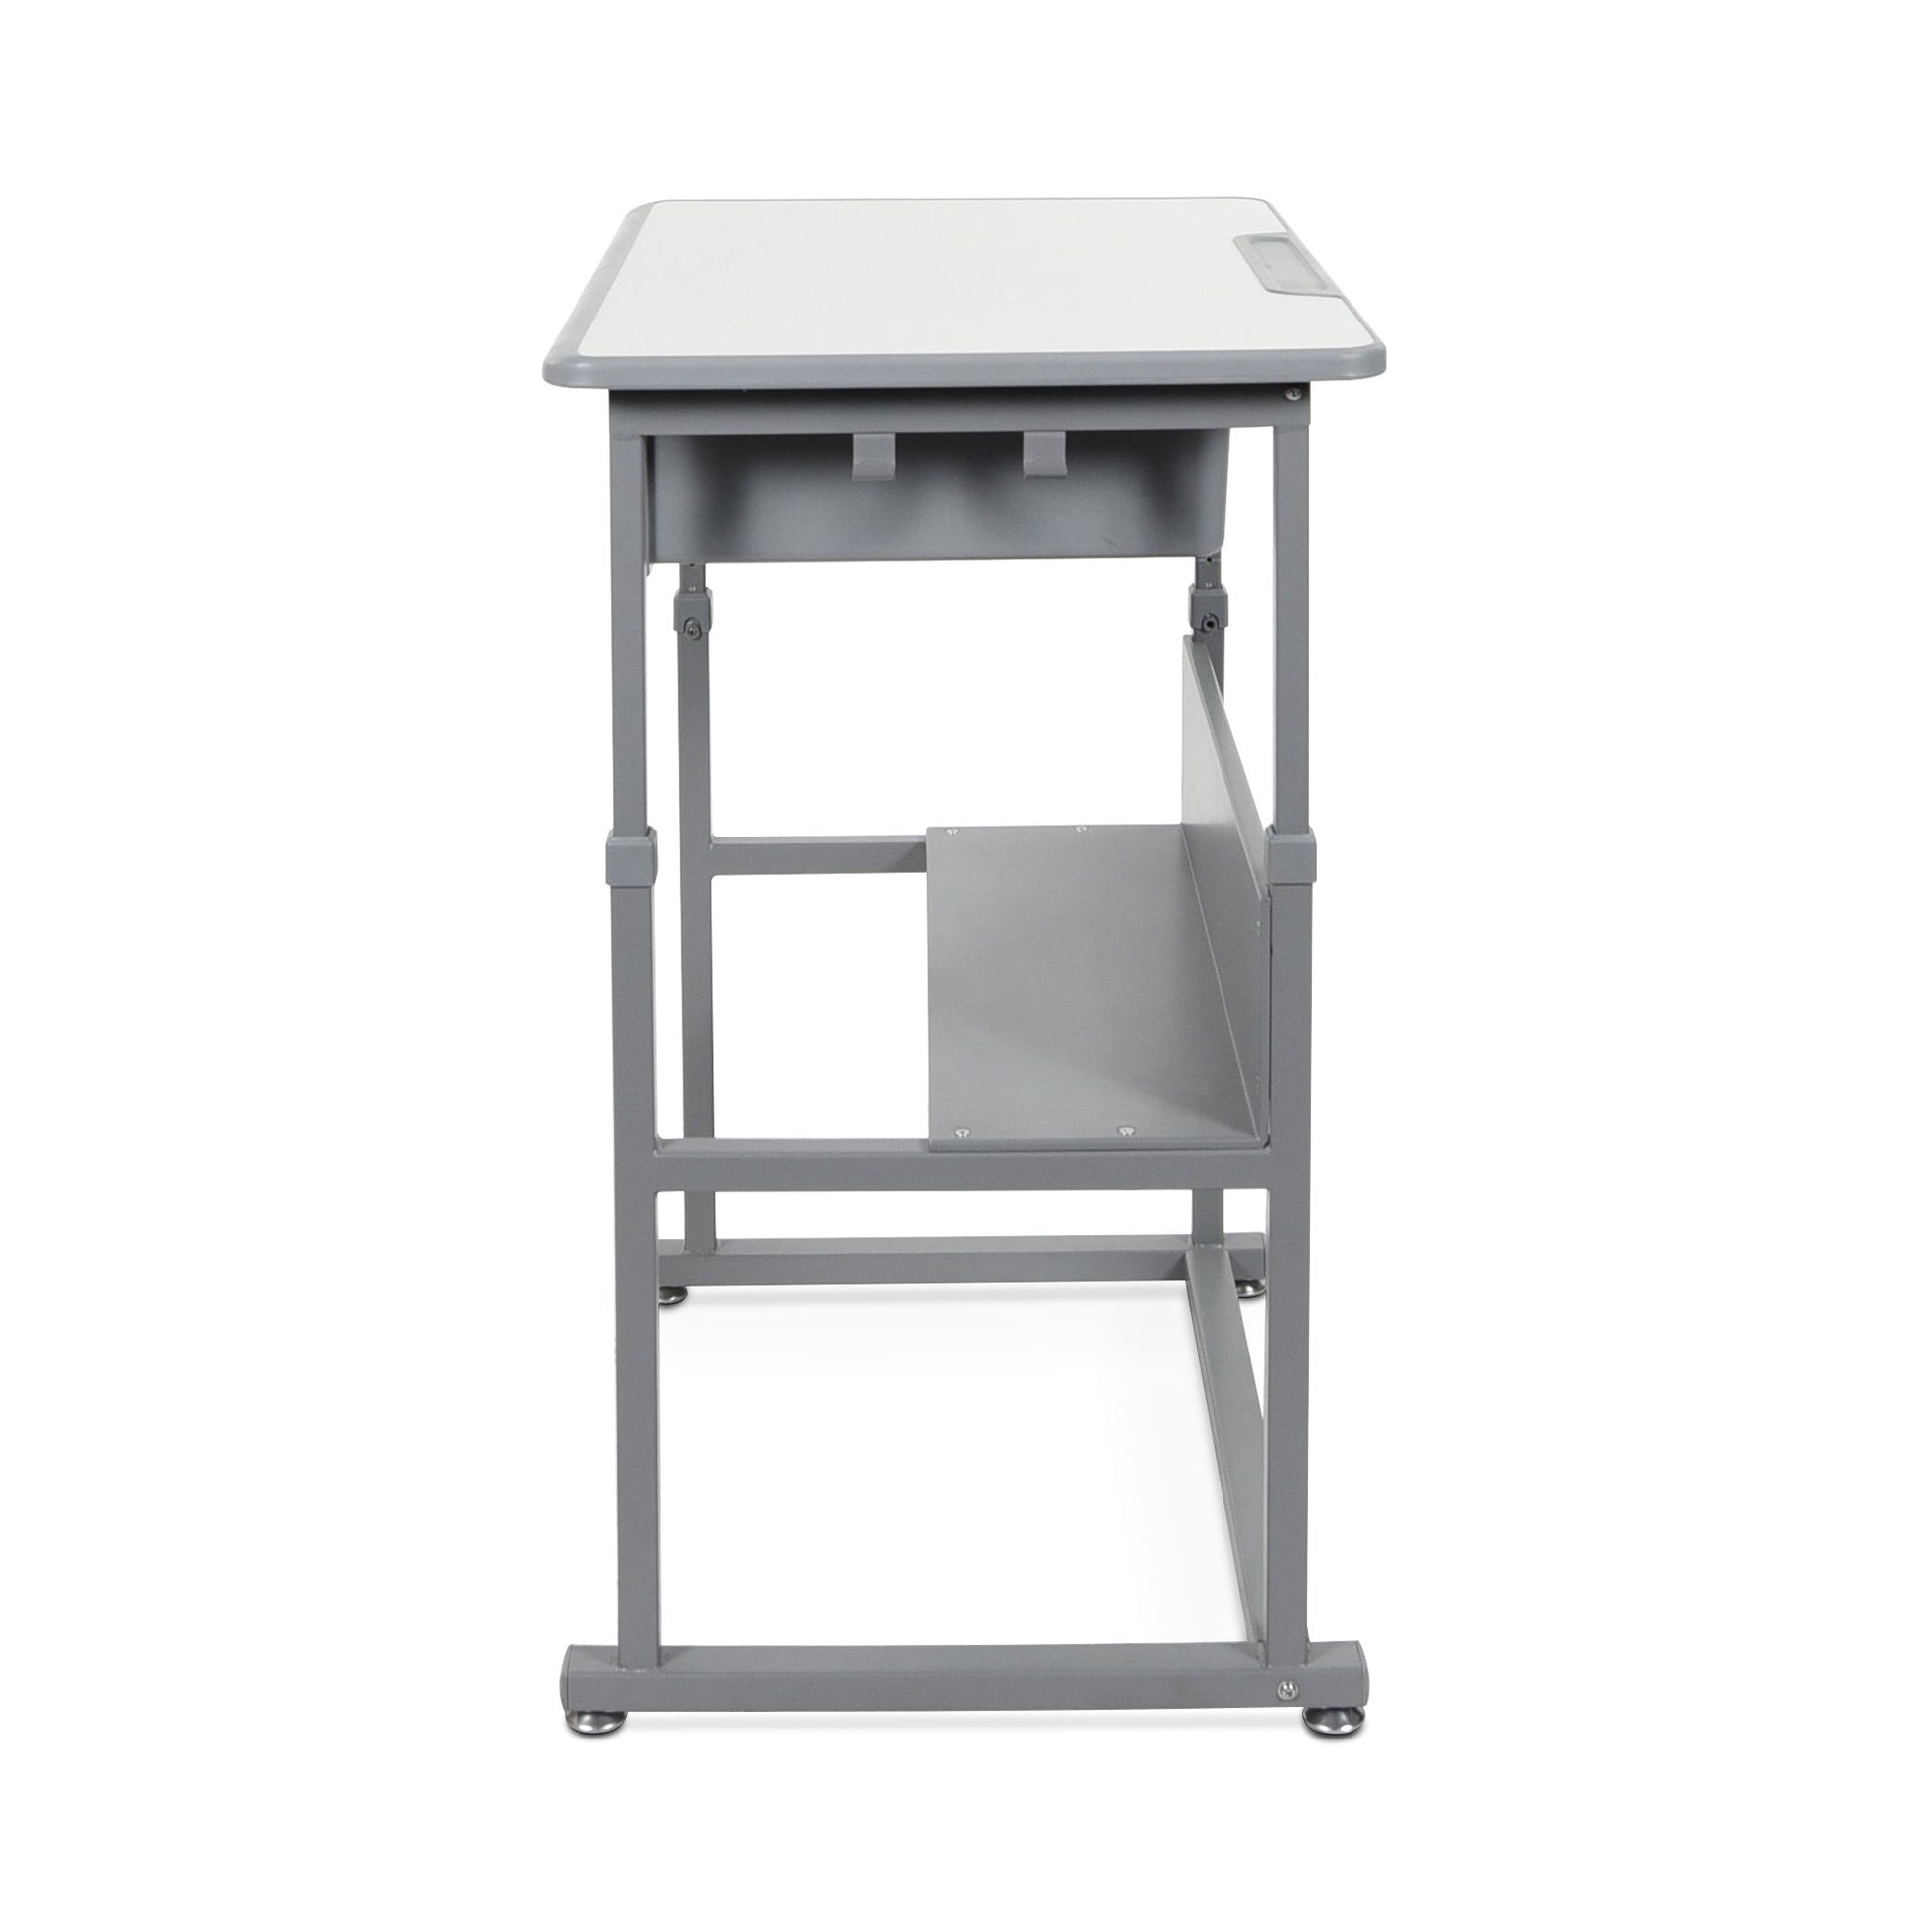 Luxor STUDENT-M - Student Desk - Manual Adjustable Desk (LUX-STUDENT-M) - SchoolOutlet